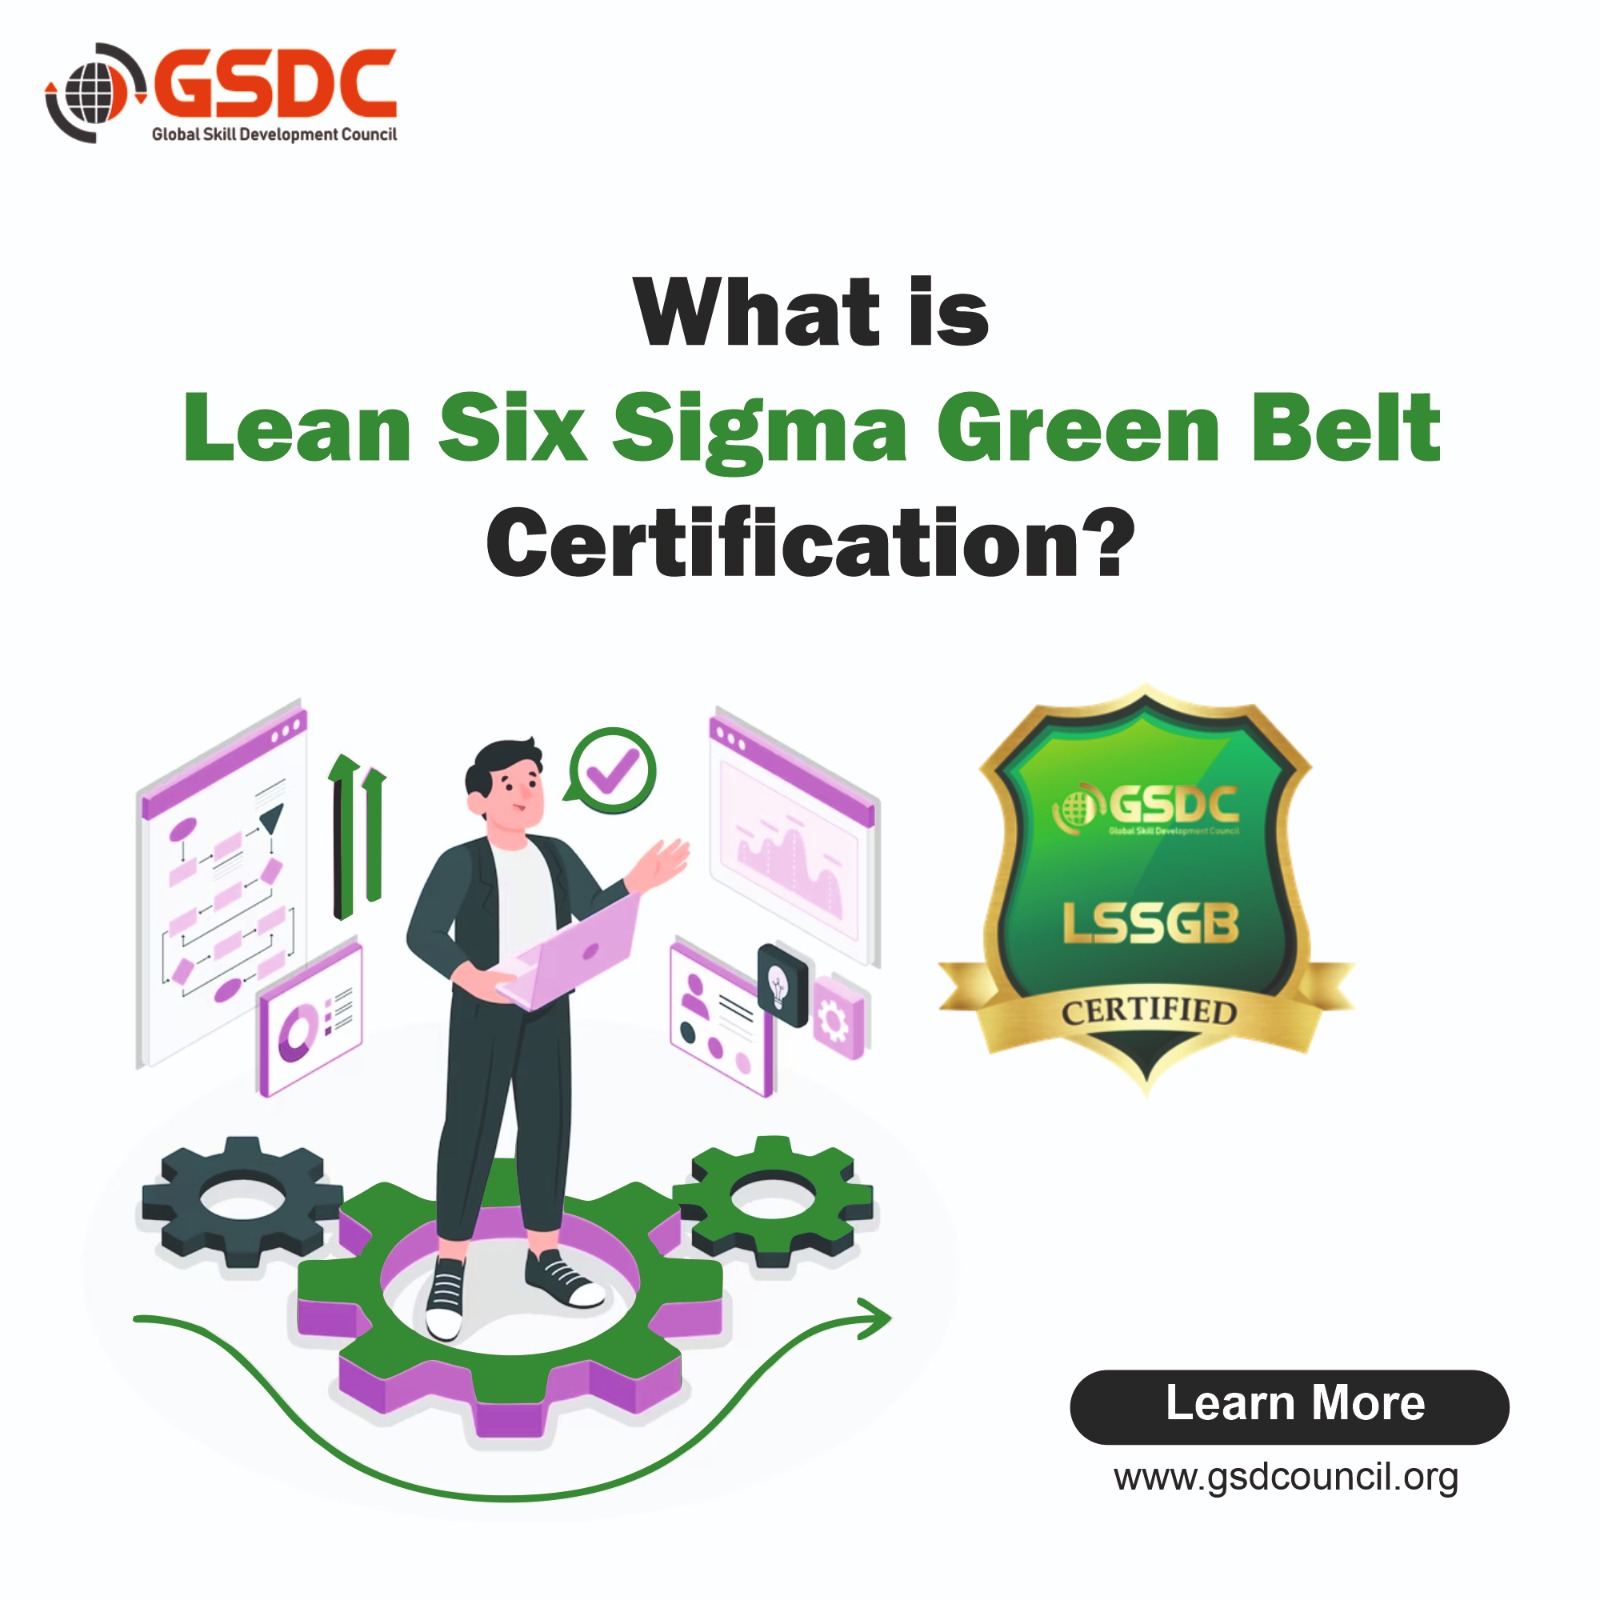 What is Lean Six Sigma Green Belt Certification?